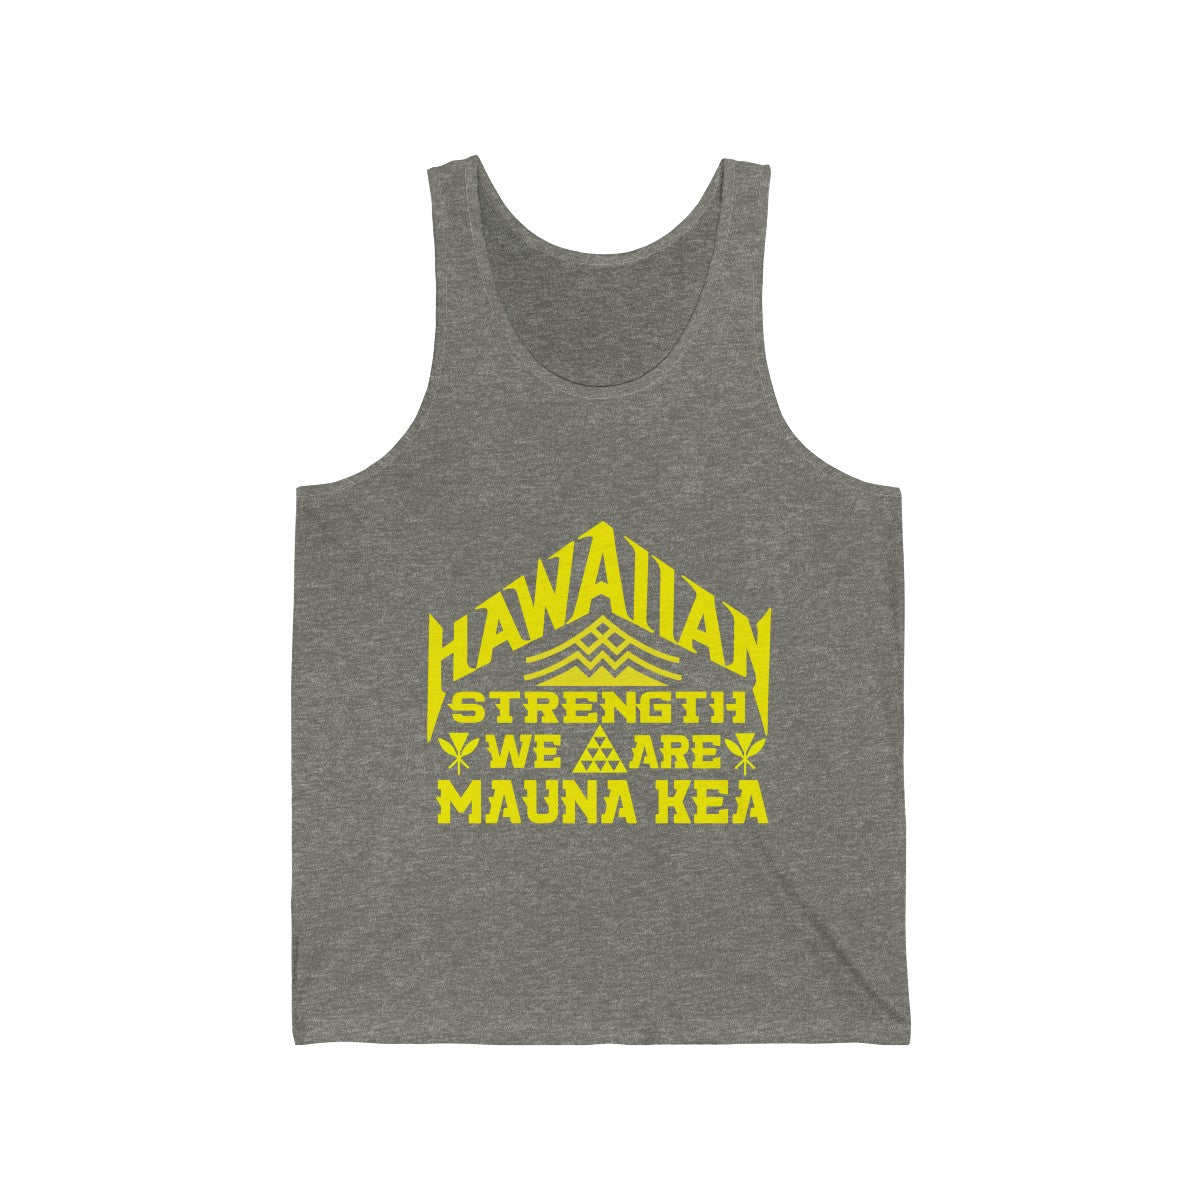 We are Mauna Kea Unisex Jersey Tank